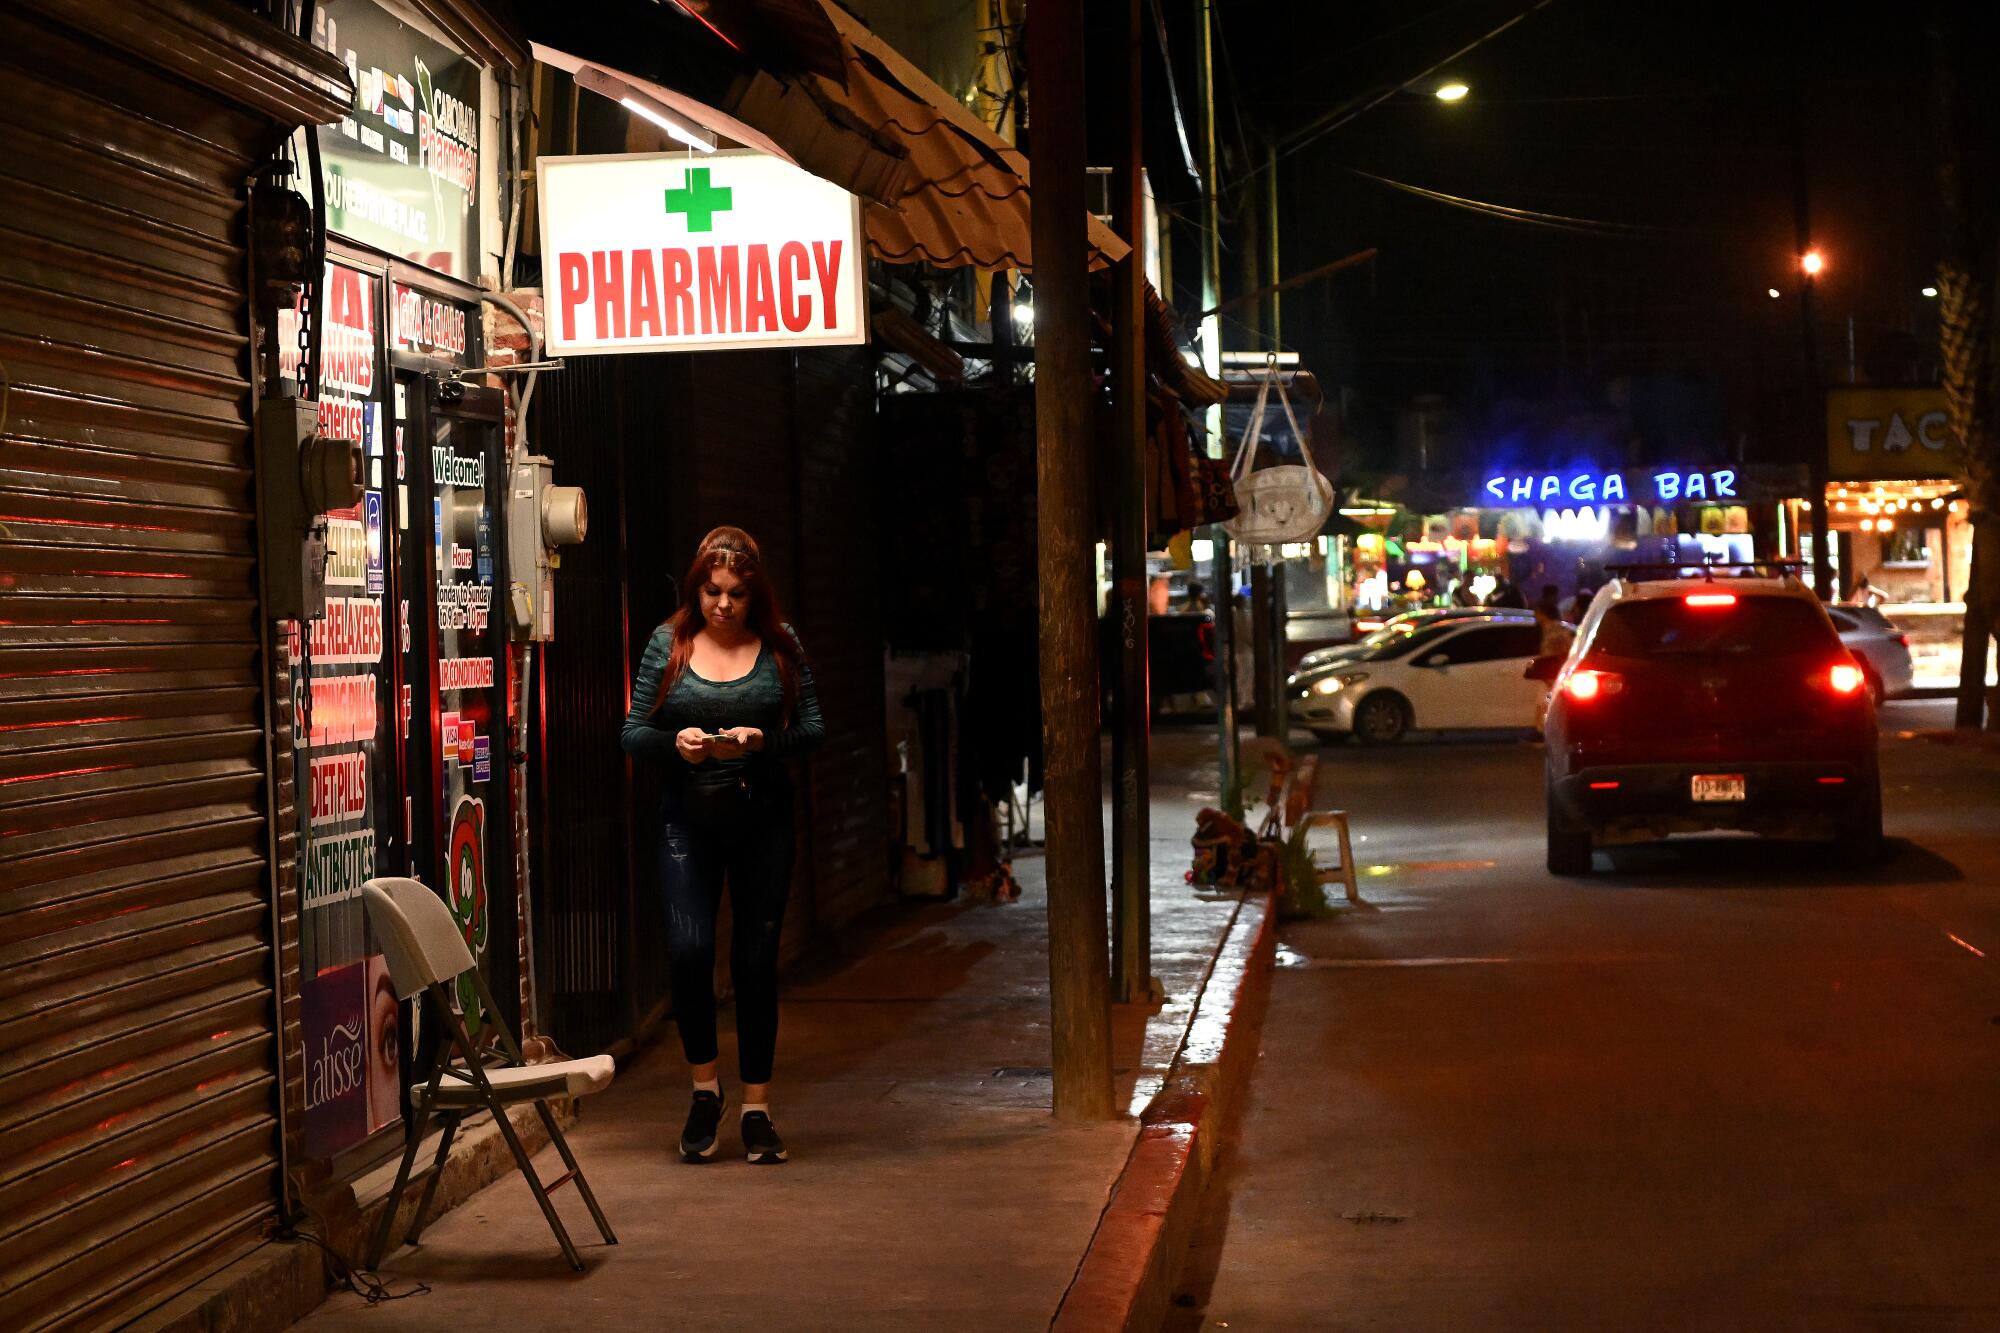 A person walks under a "Pharmacy" sign on a sidewalk.